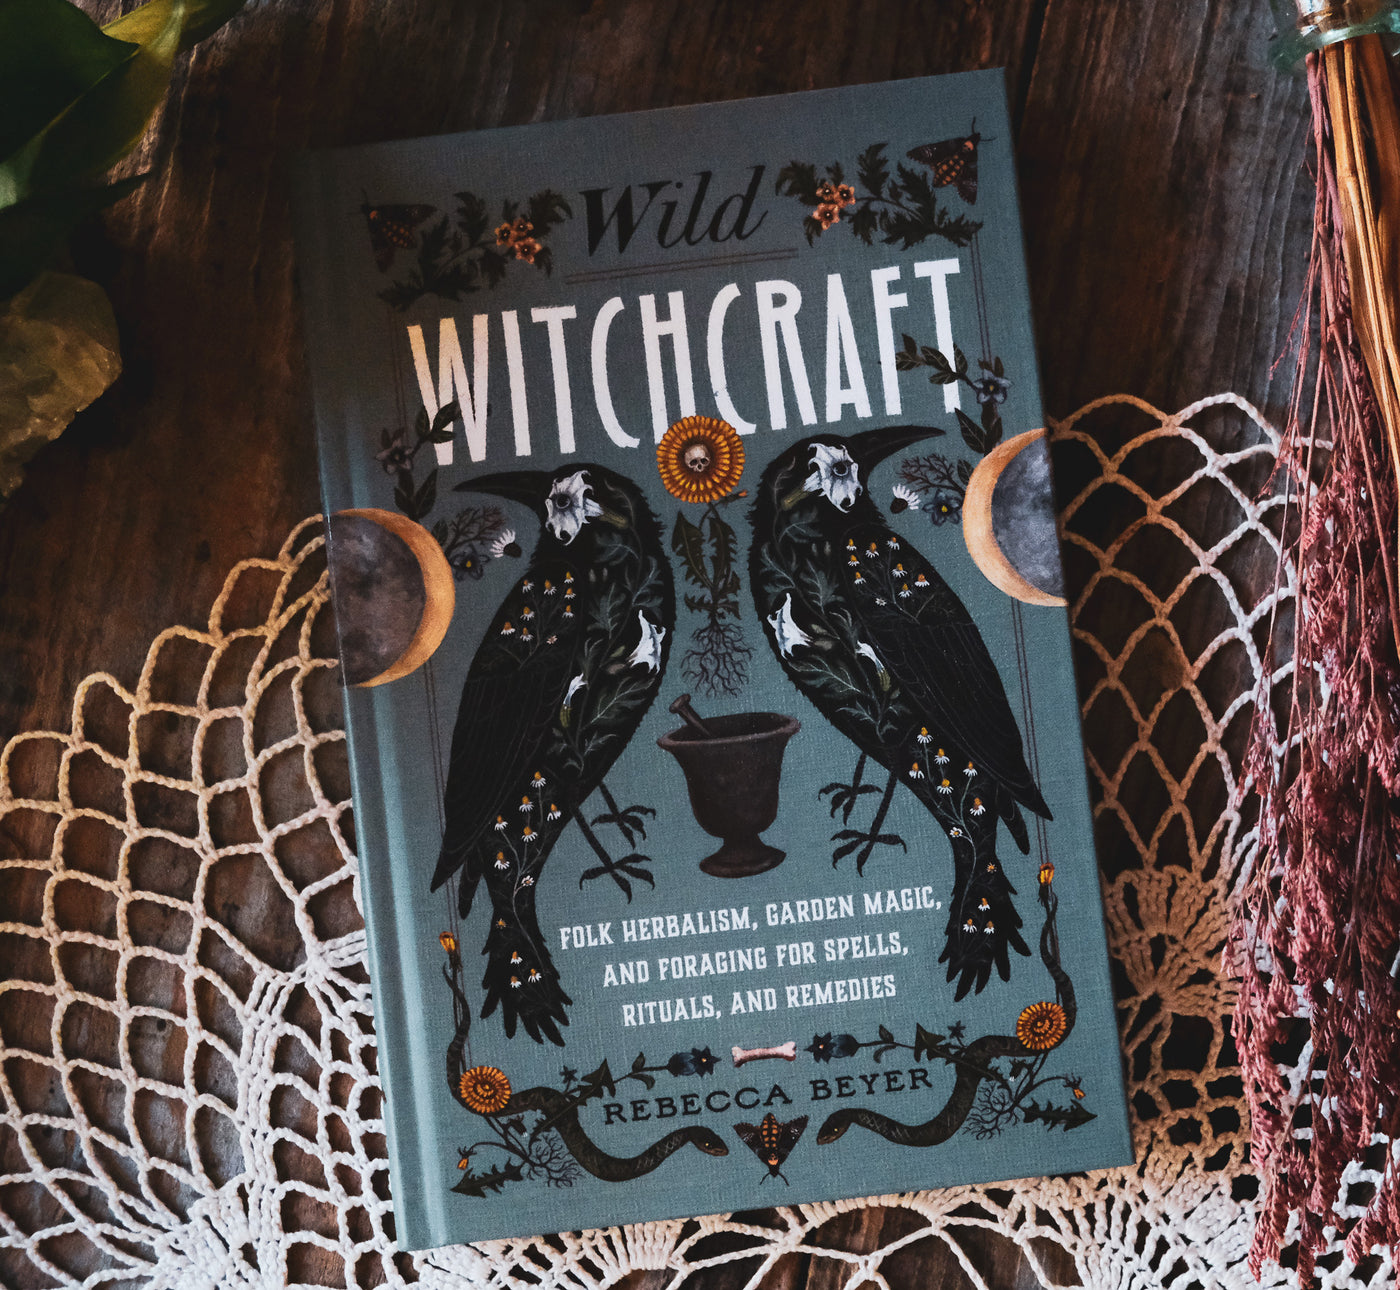 Wild Witchcraft: Folk Herbalism, Garden Magic, and Foraging for Spells